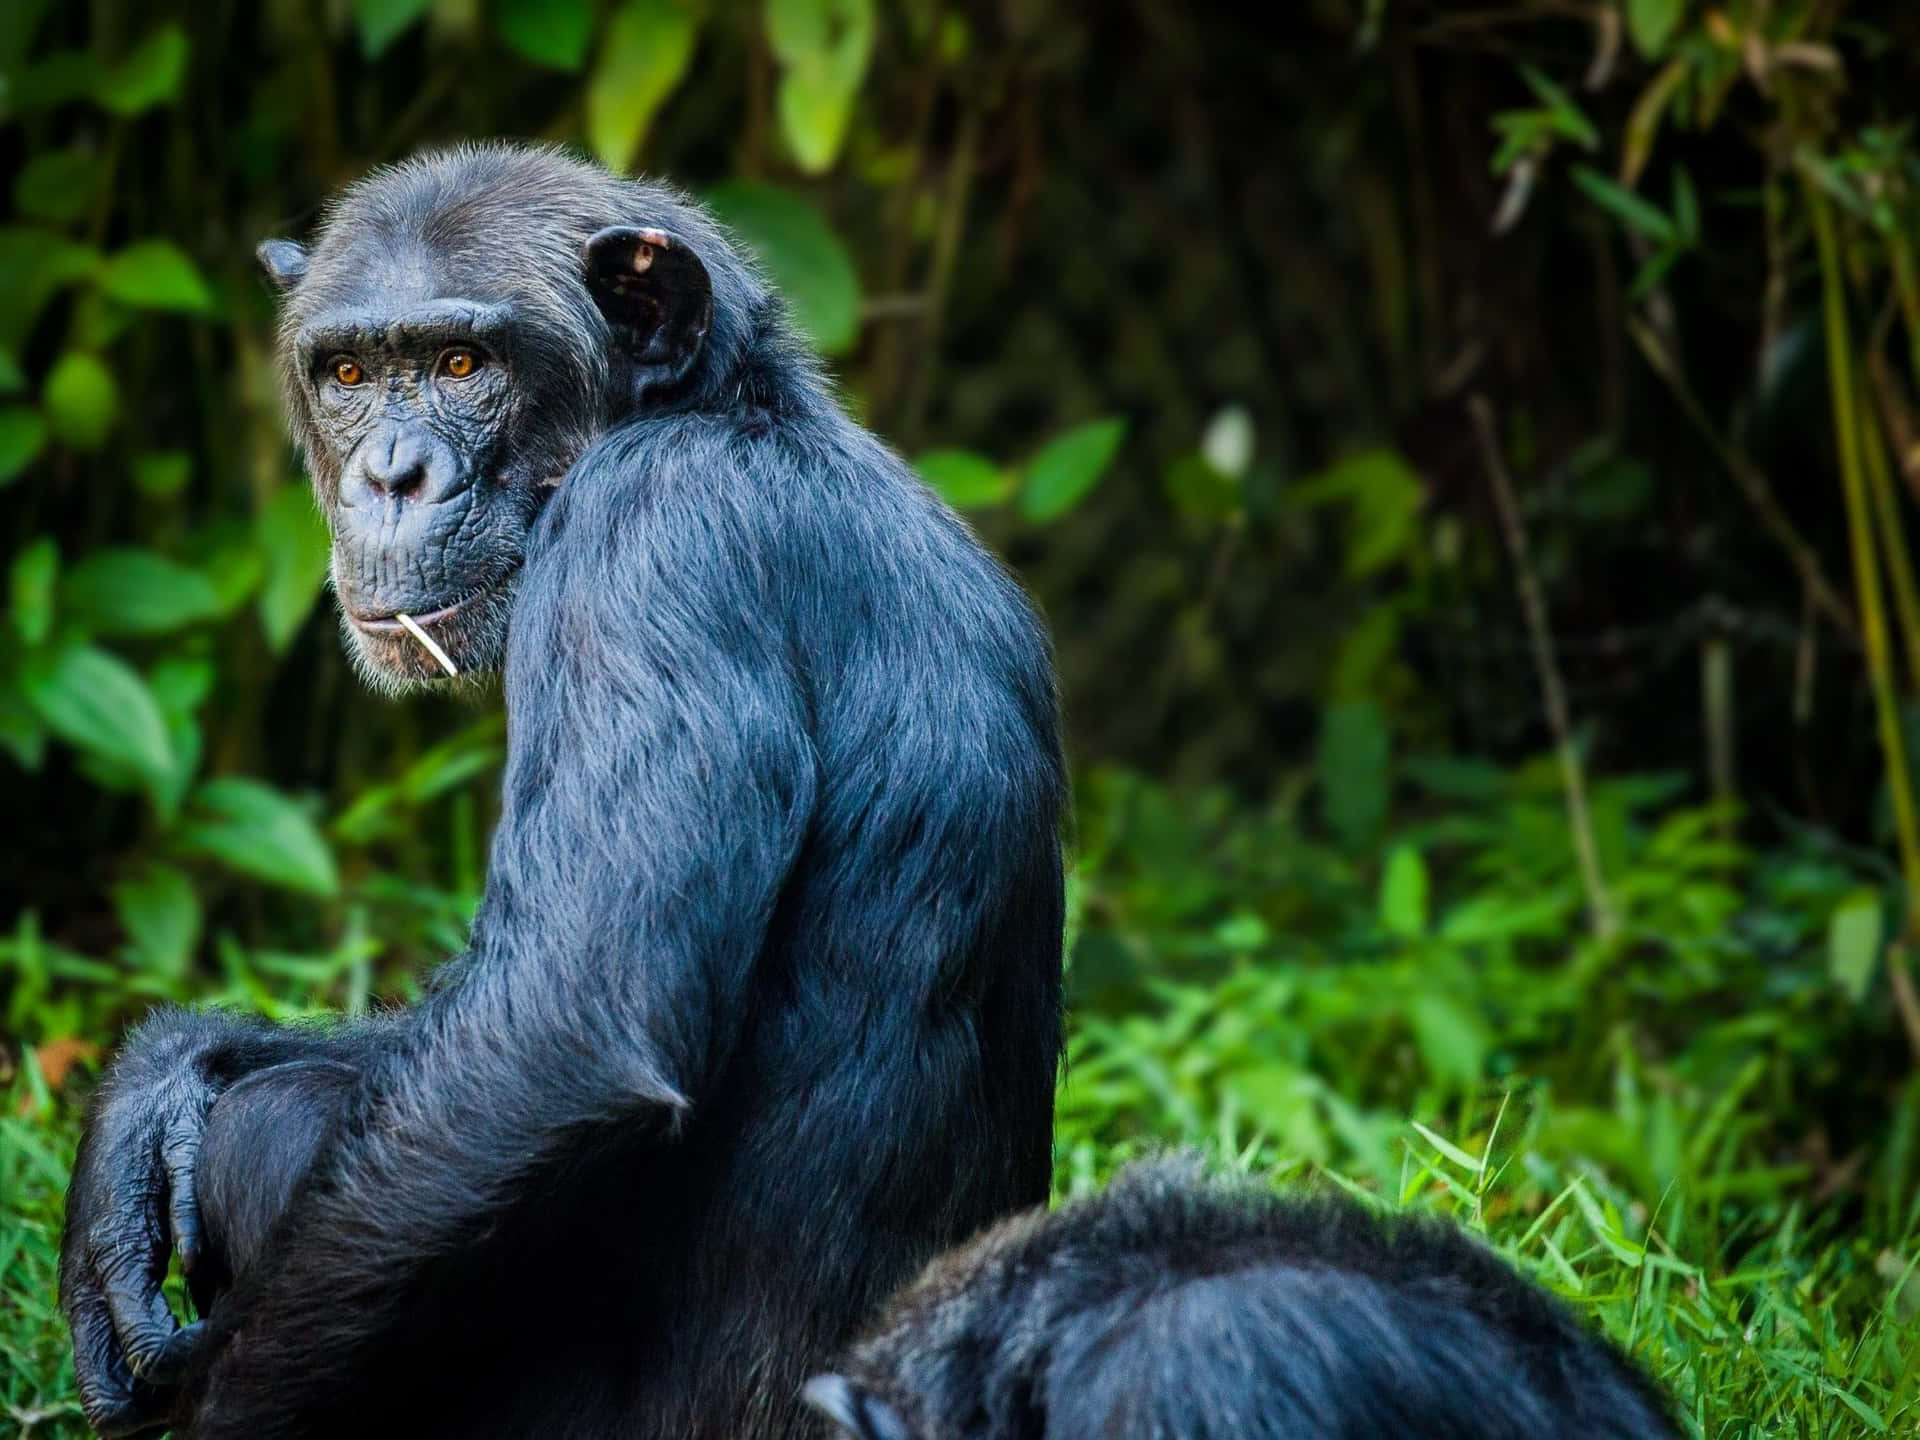 A Close Up Of A Chimpanzee